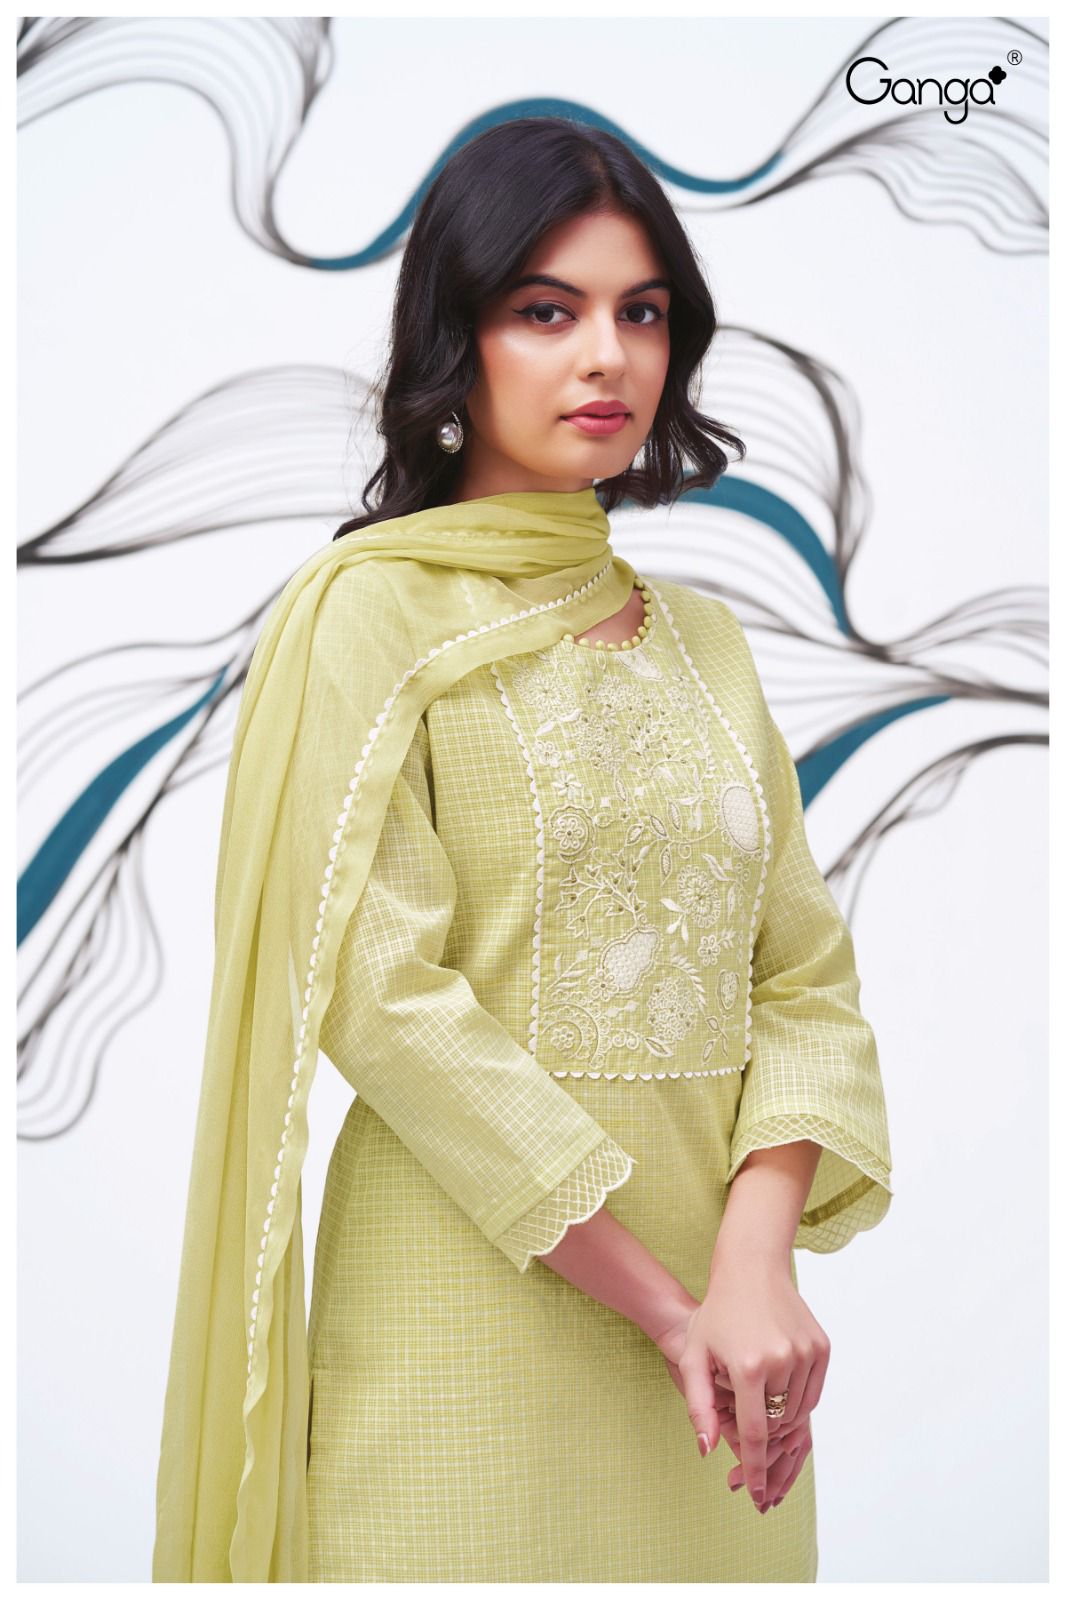 Rylan 2539 Ganga Premium Cotton Plazzo Style Suits Manufacturer Gujarat